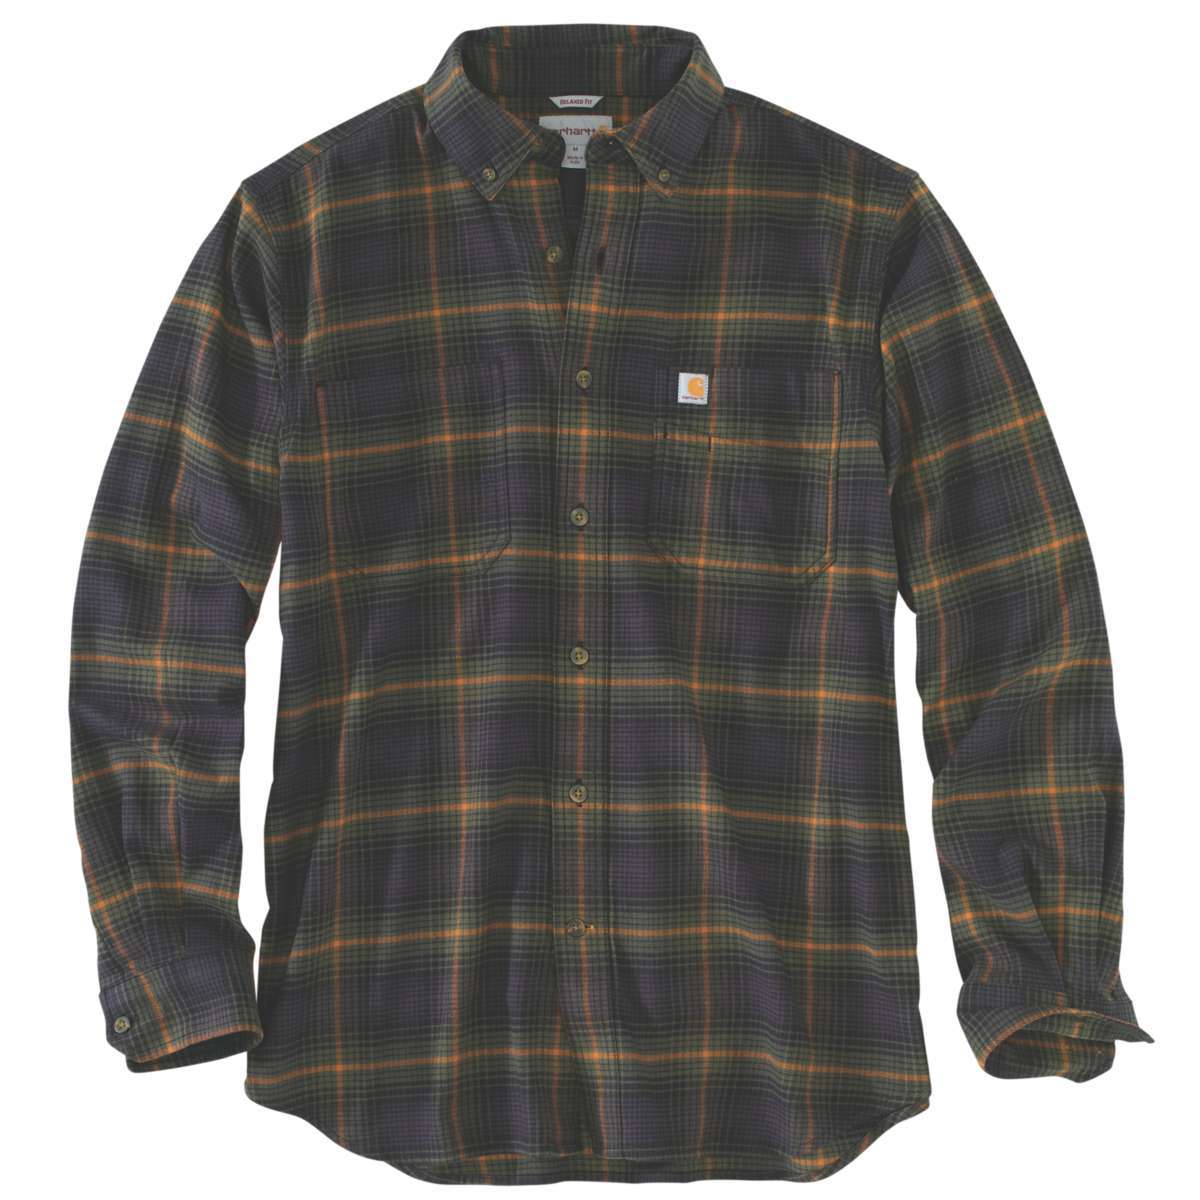 Carhartt Men's Rugged Flex Hamilton Plaid Long-Sleeve Shirt - Green, XL